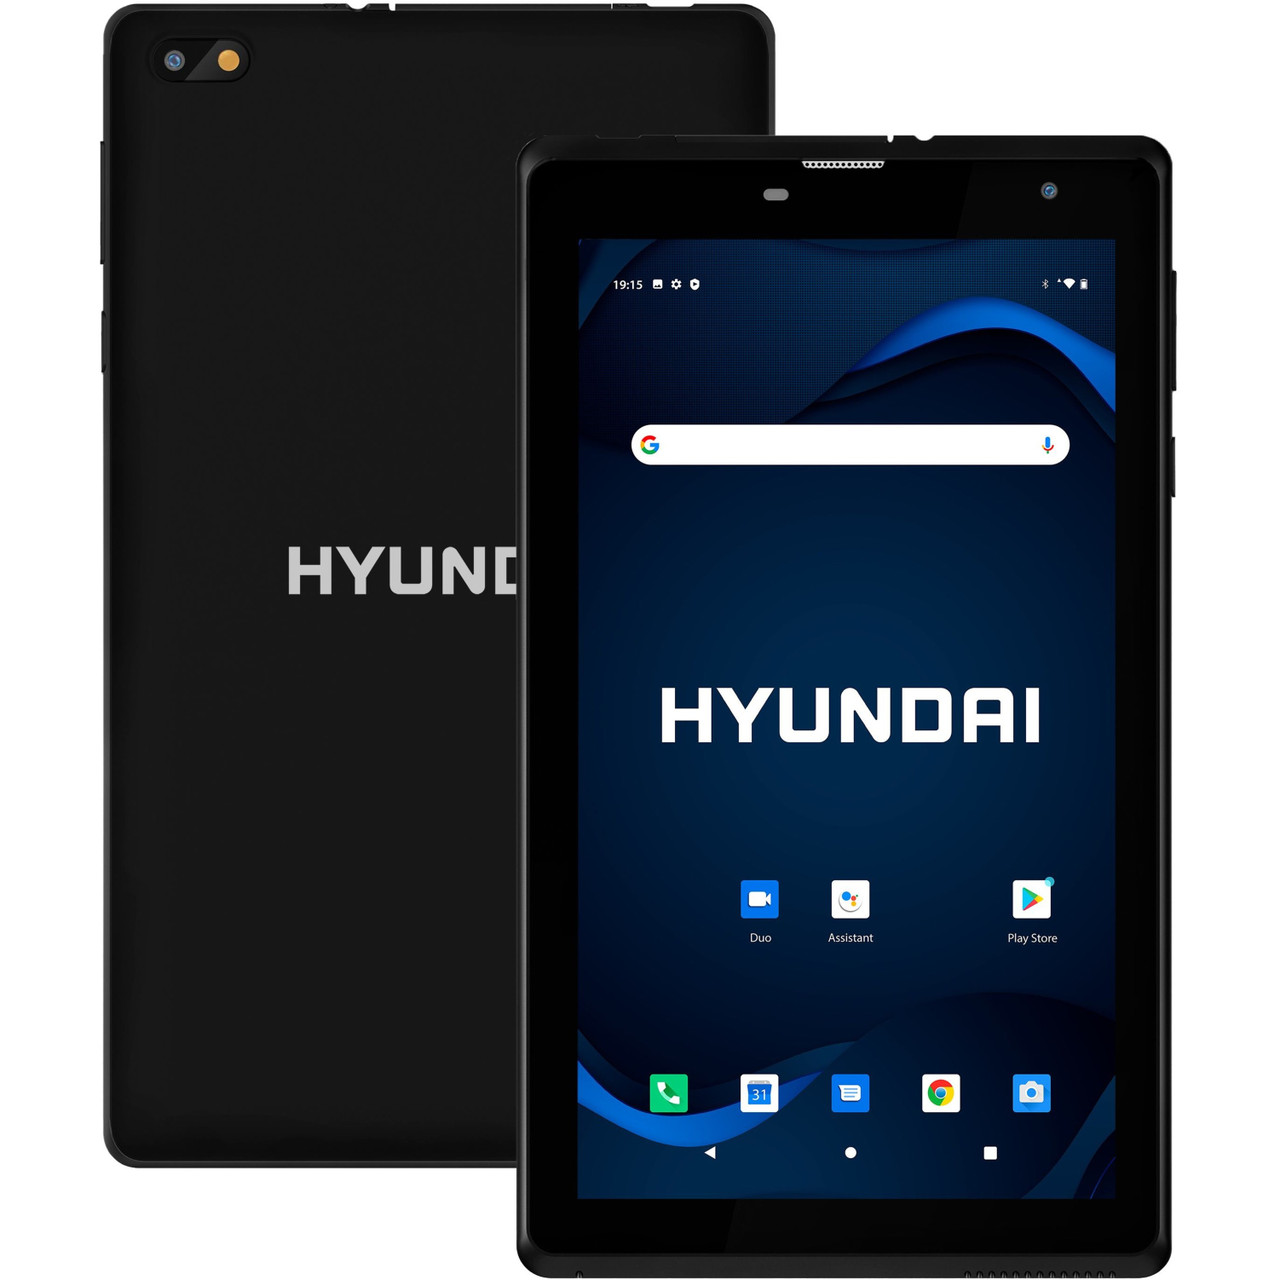 Hyundai HyTab 7WC1, 7" Tablet, 1024x600 IPS, Android 10 Go edition, Quad-Core Processor, 1GB RAM, 32GB Storage, 2MP/2MP, WIFI - Black - HT7WC1PBK